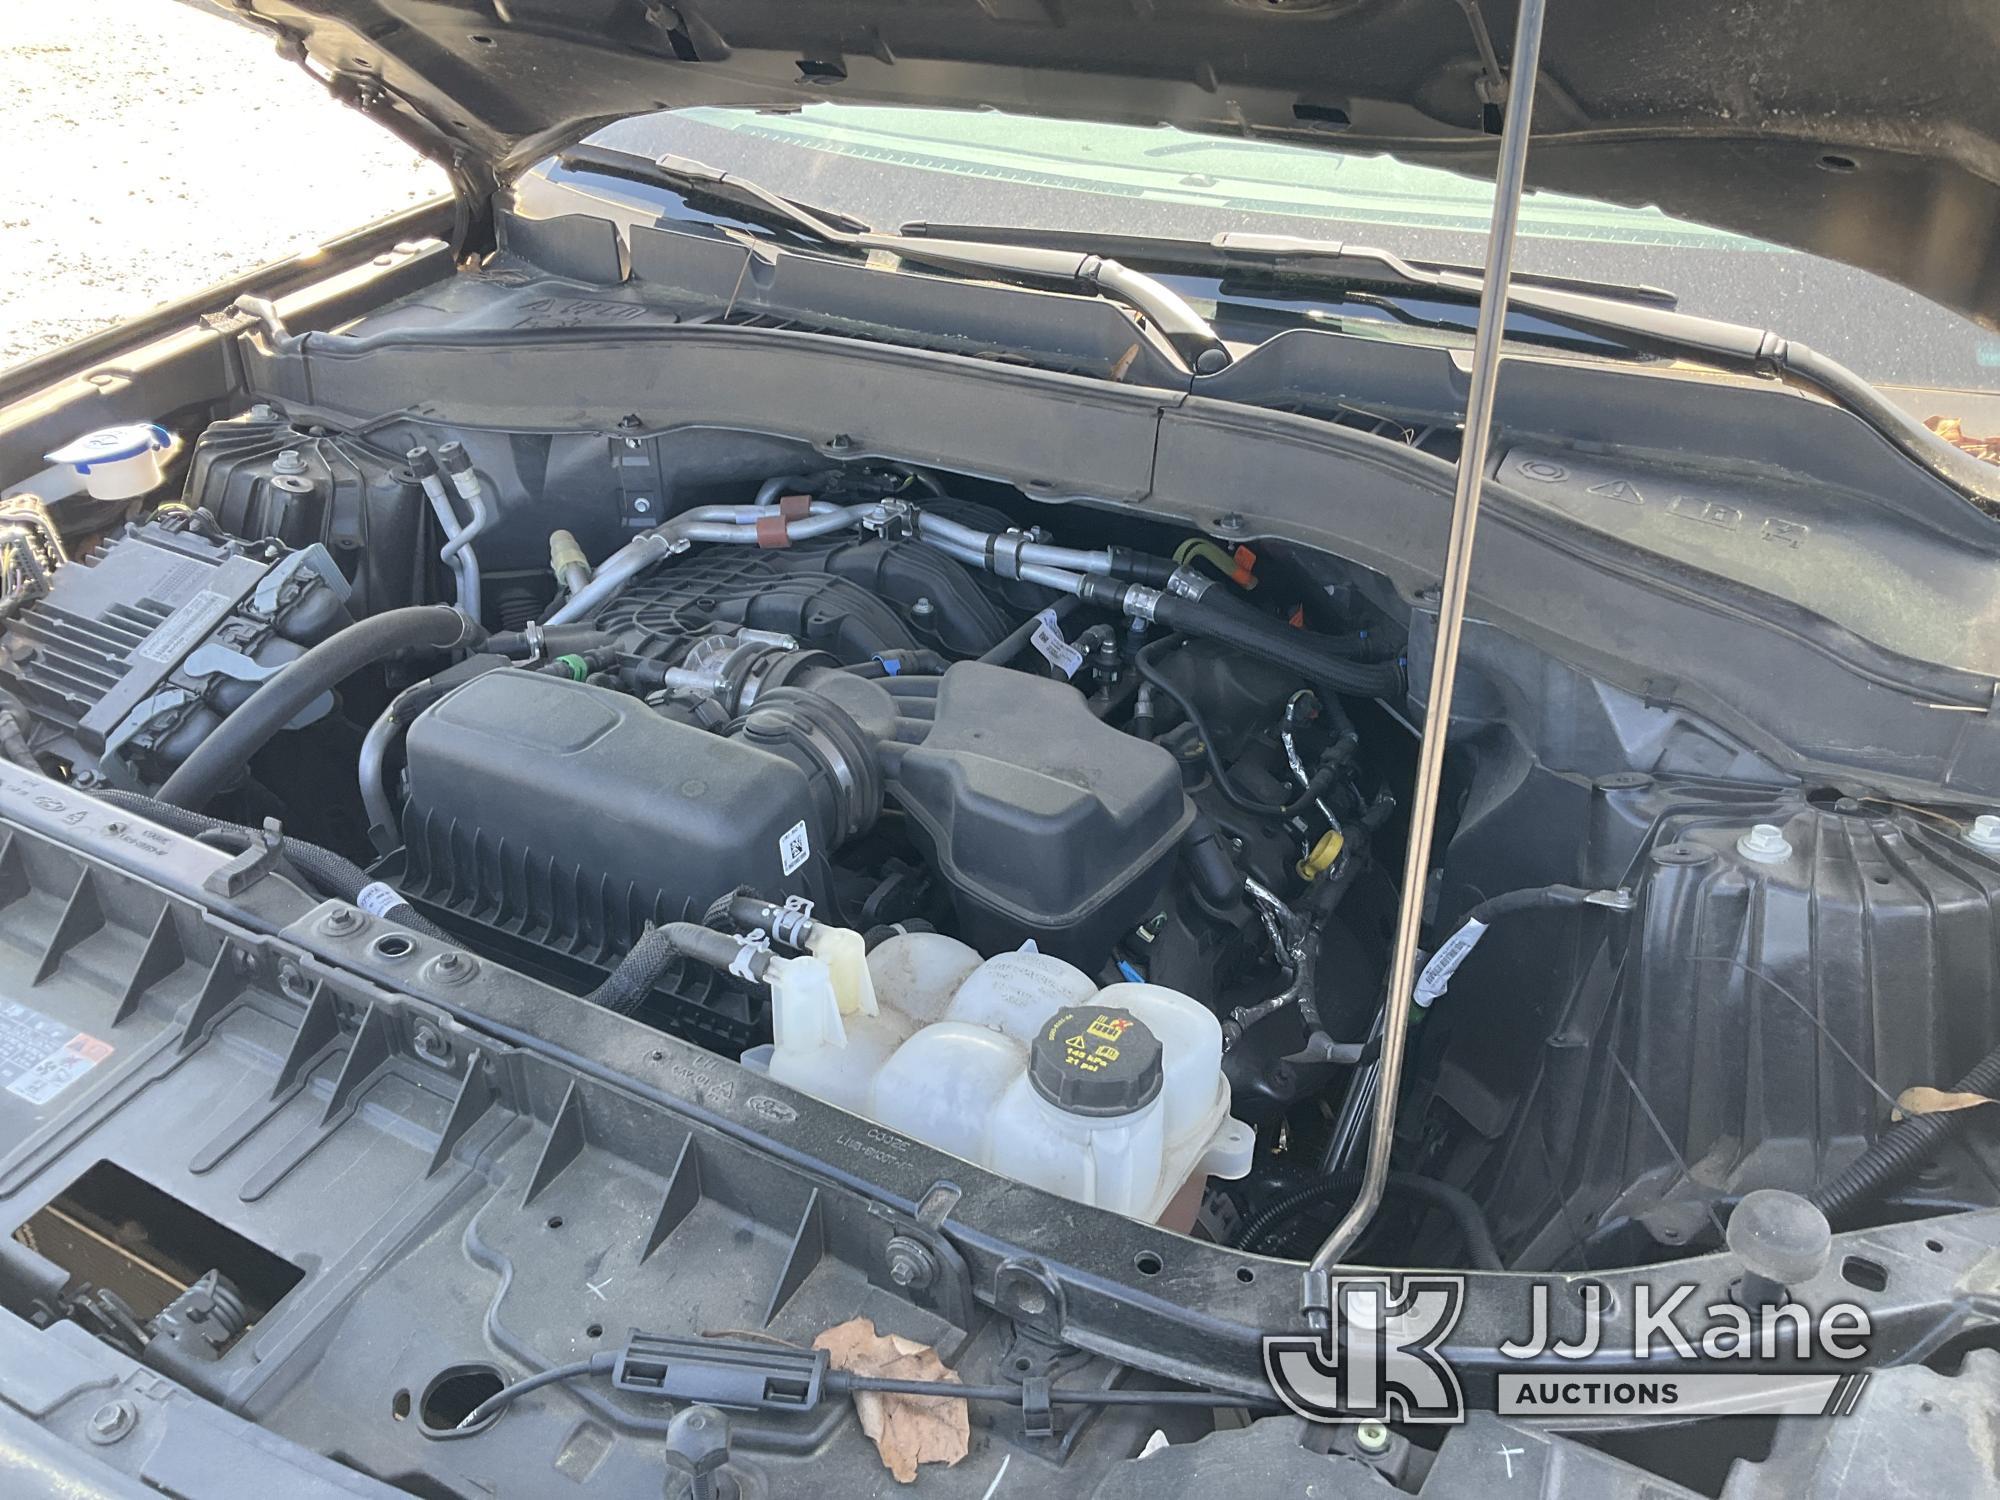 (Villa Rica, GA) 2020 Ford Explorer 4x4 4-Door Sport Utility Vehicle, (GA Power Unit) Wrecked) (Runs